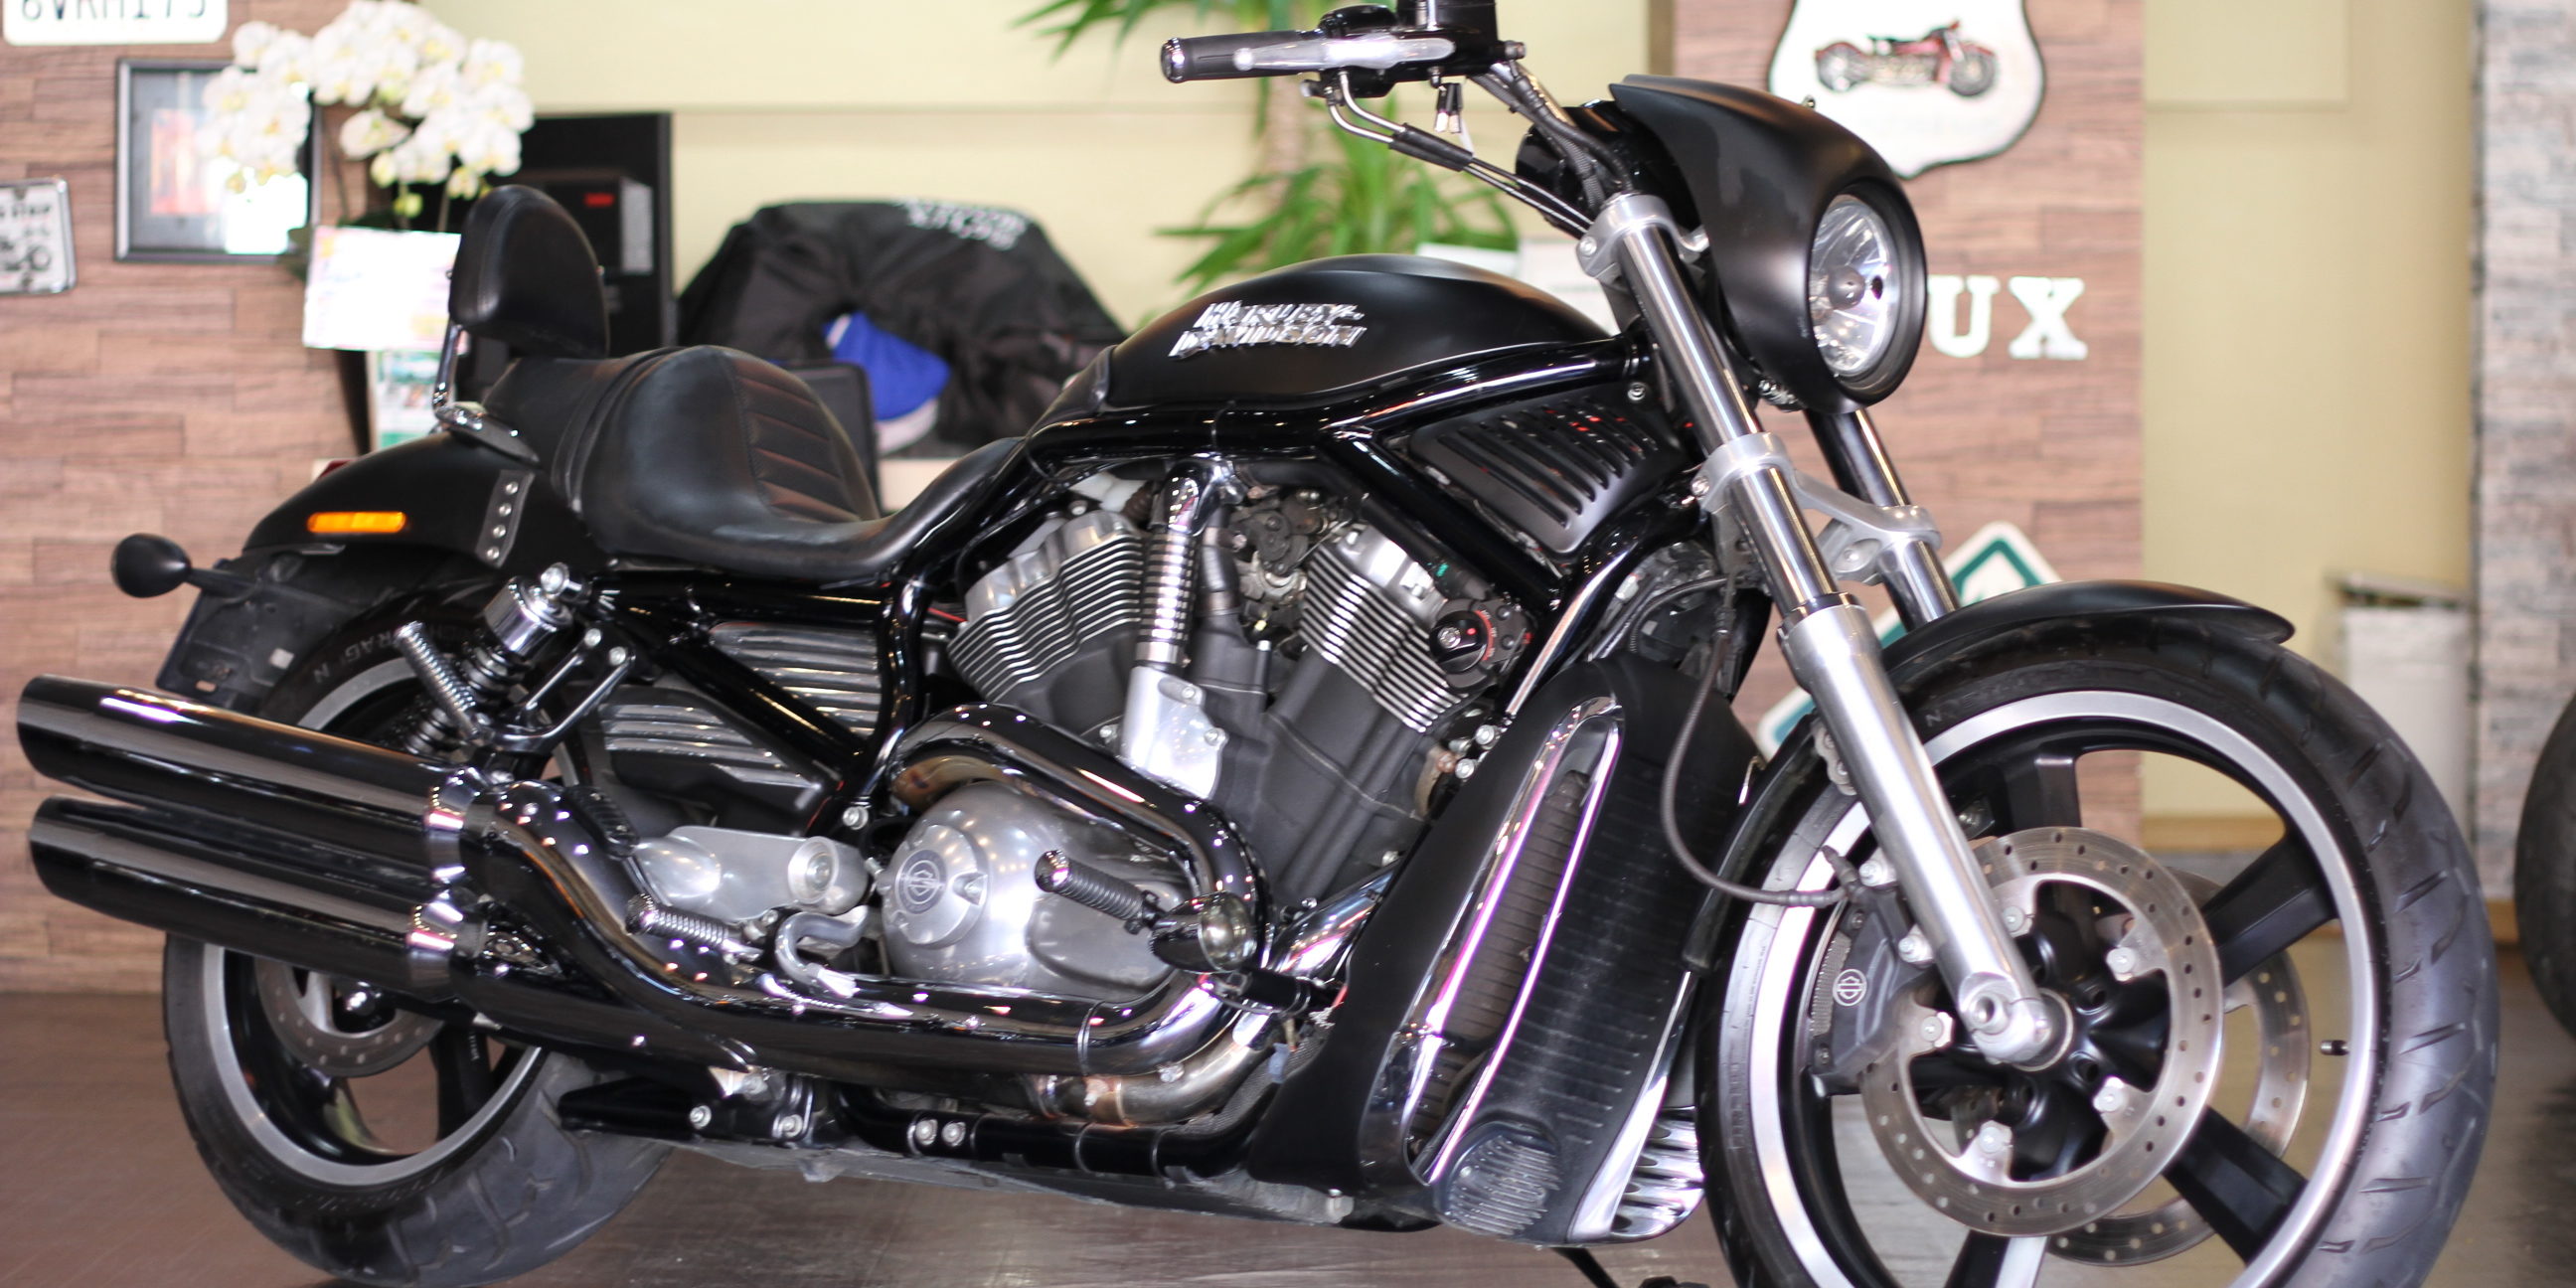 ｈａｒｌｅｙ ｄａｖｉｄｓｏｎ ナイトロッド1250 大型バイク ハーレーカスタム ジーラックス G Lux Motoring